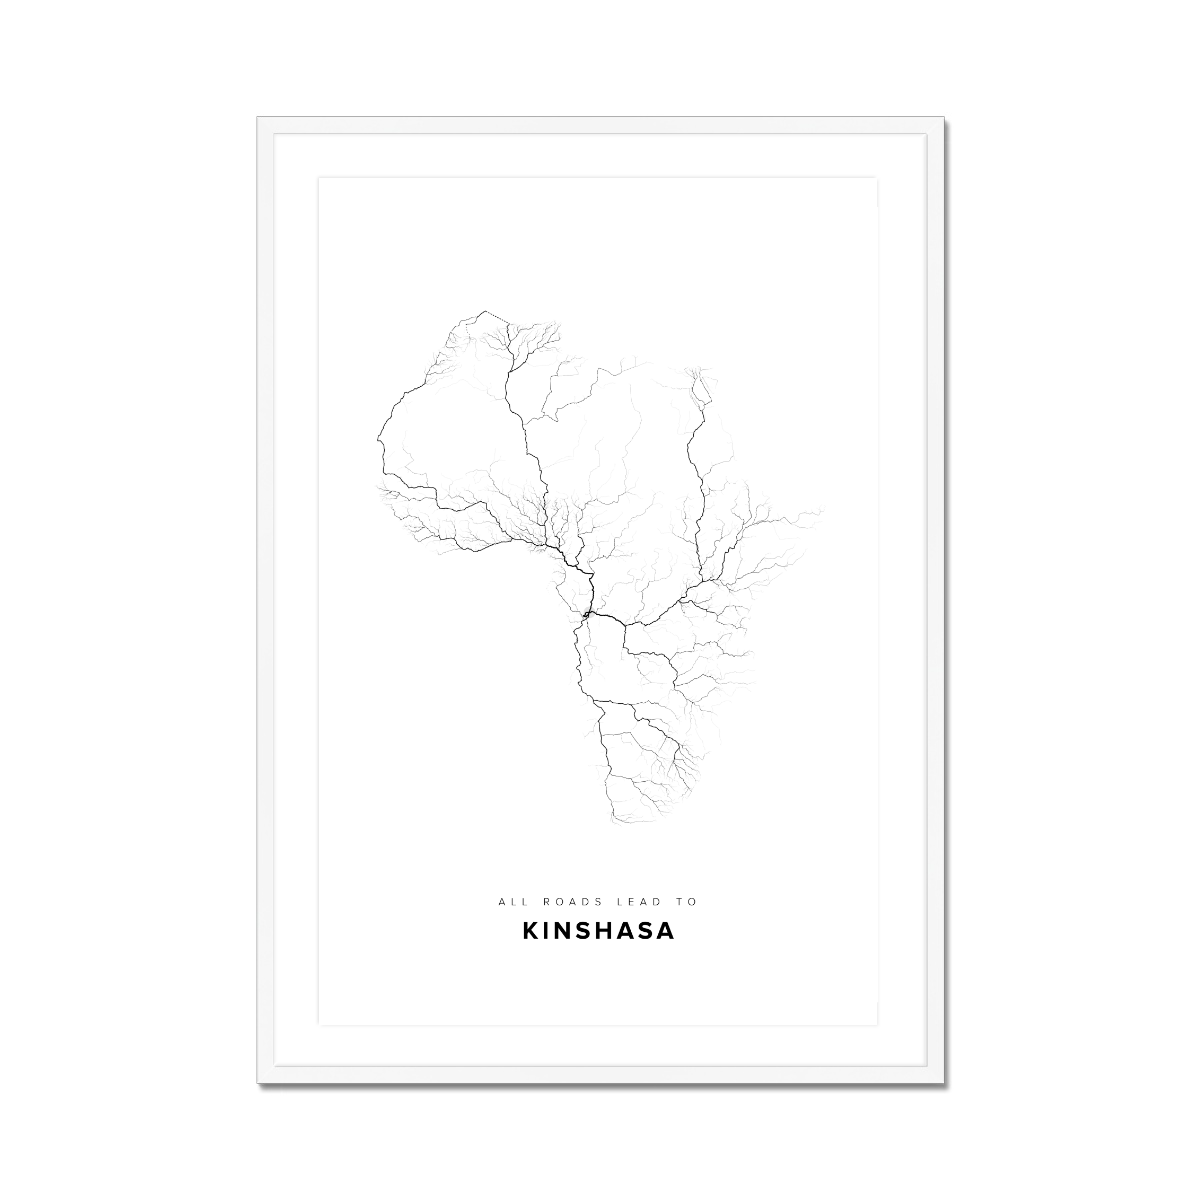 All roads lead to Kinshasa (Congo (Democratic Republic of the)) Fine Art Map Print